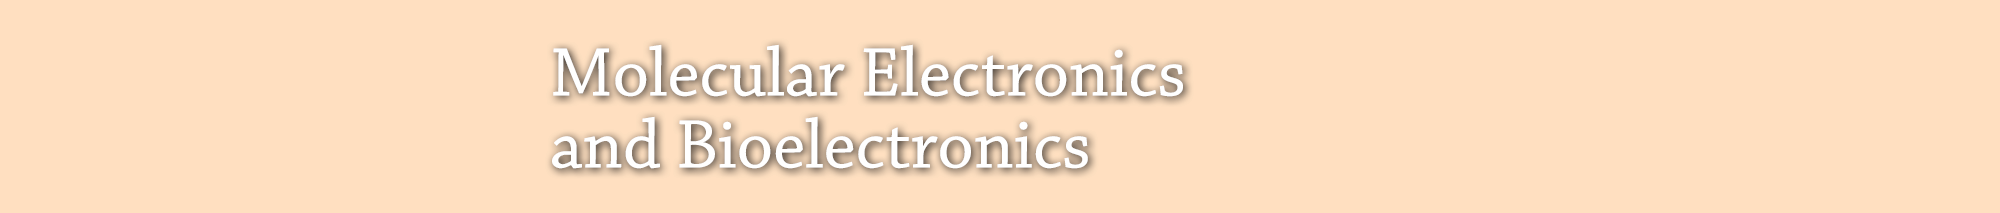 Molecular Electronics and Bioelectronics